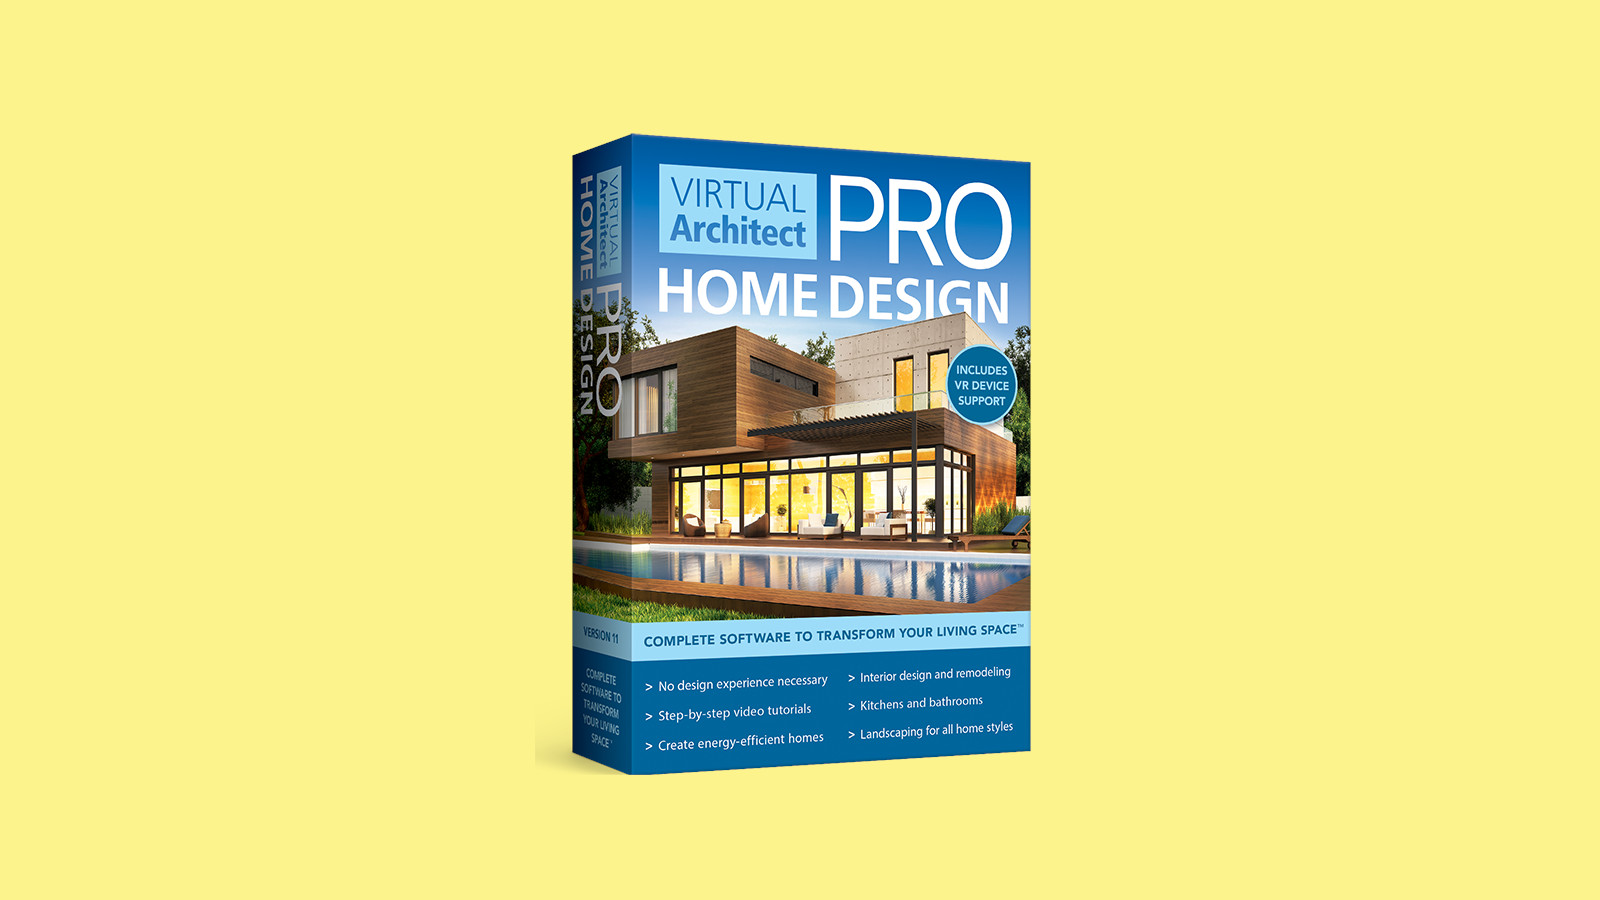 Virtual Architect Professional Home Design 11 CD Key, 258.03$